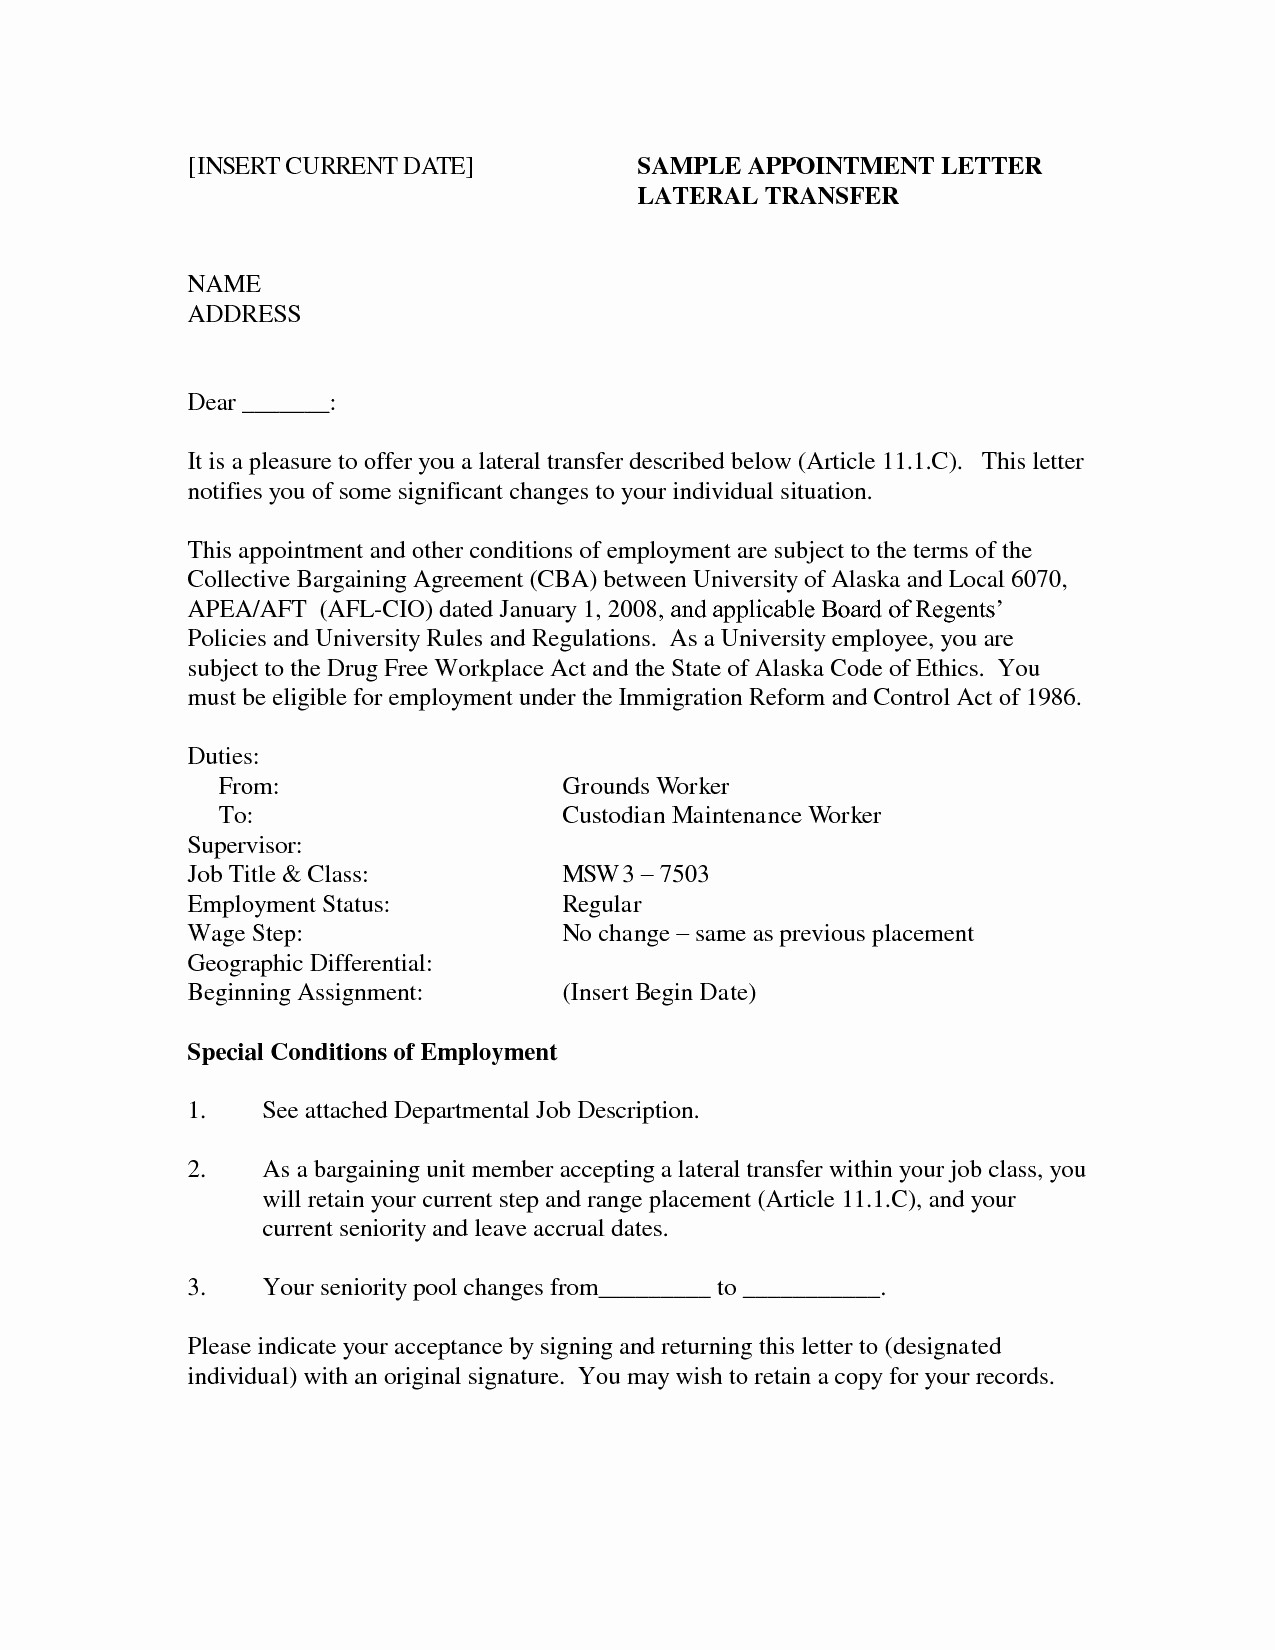 Resume Genius Cover Letter Template - Resume Cover Letter Unsolicited New Resume Genius Cover Letter